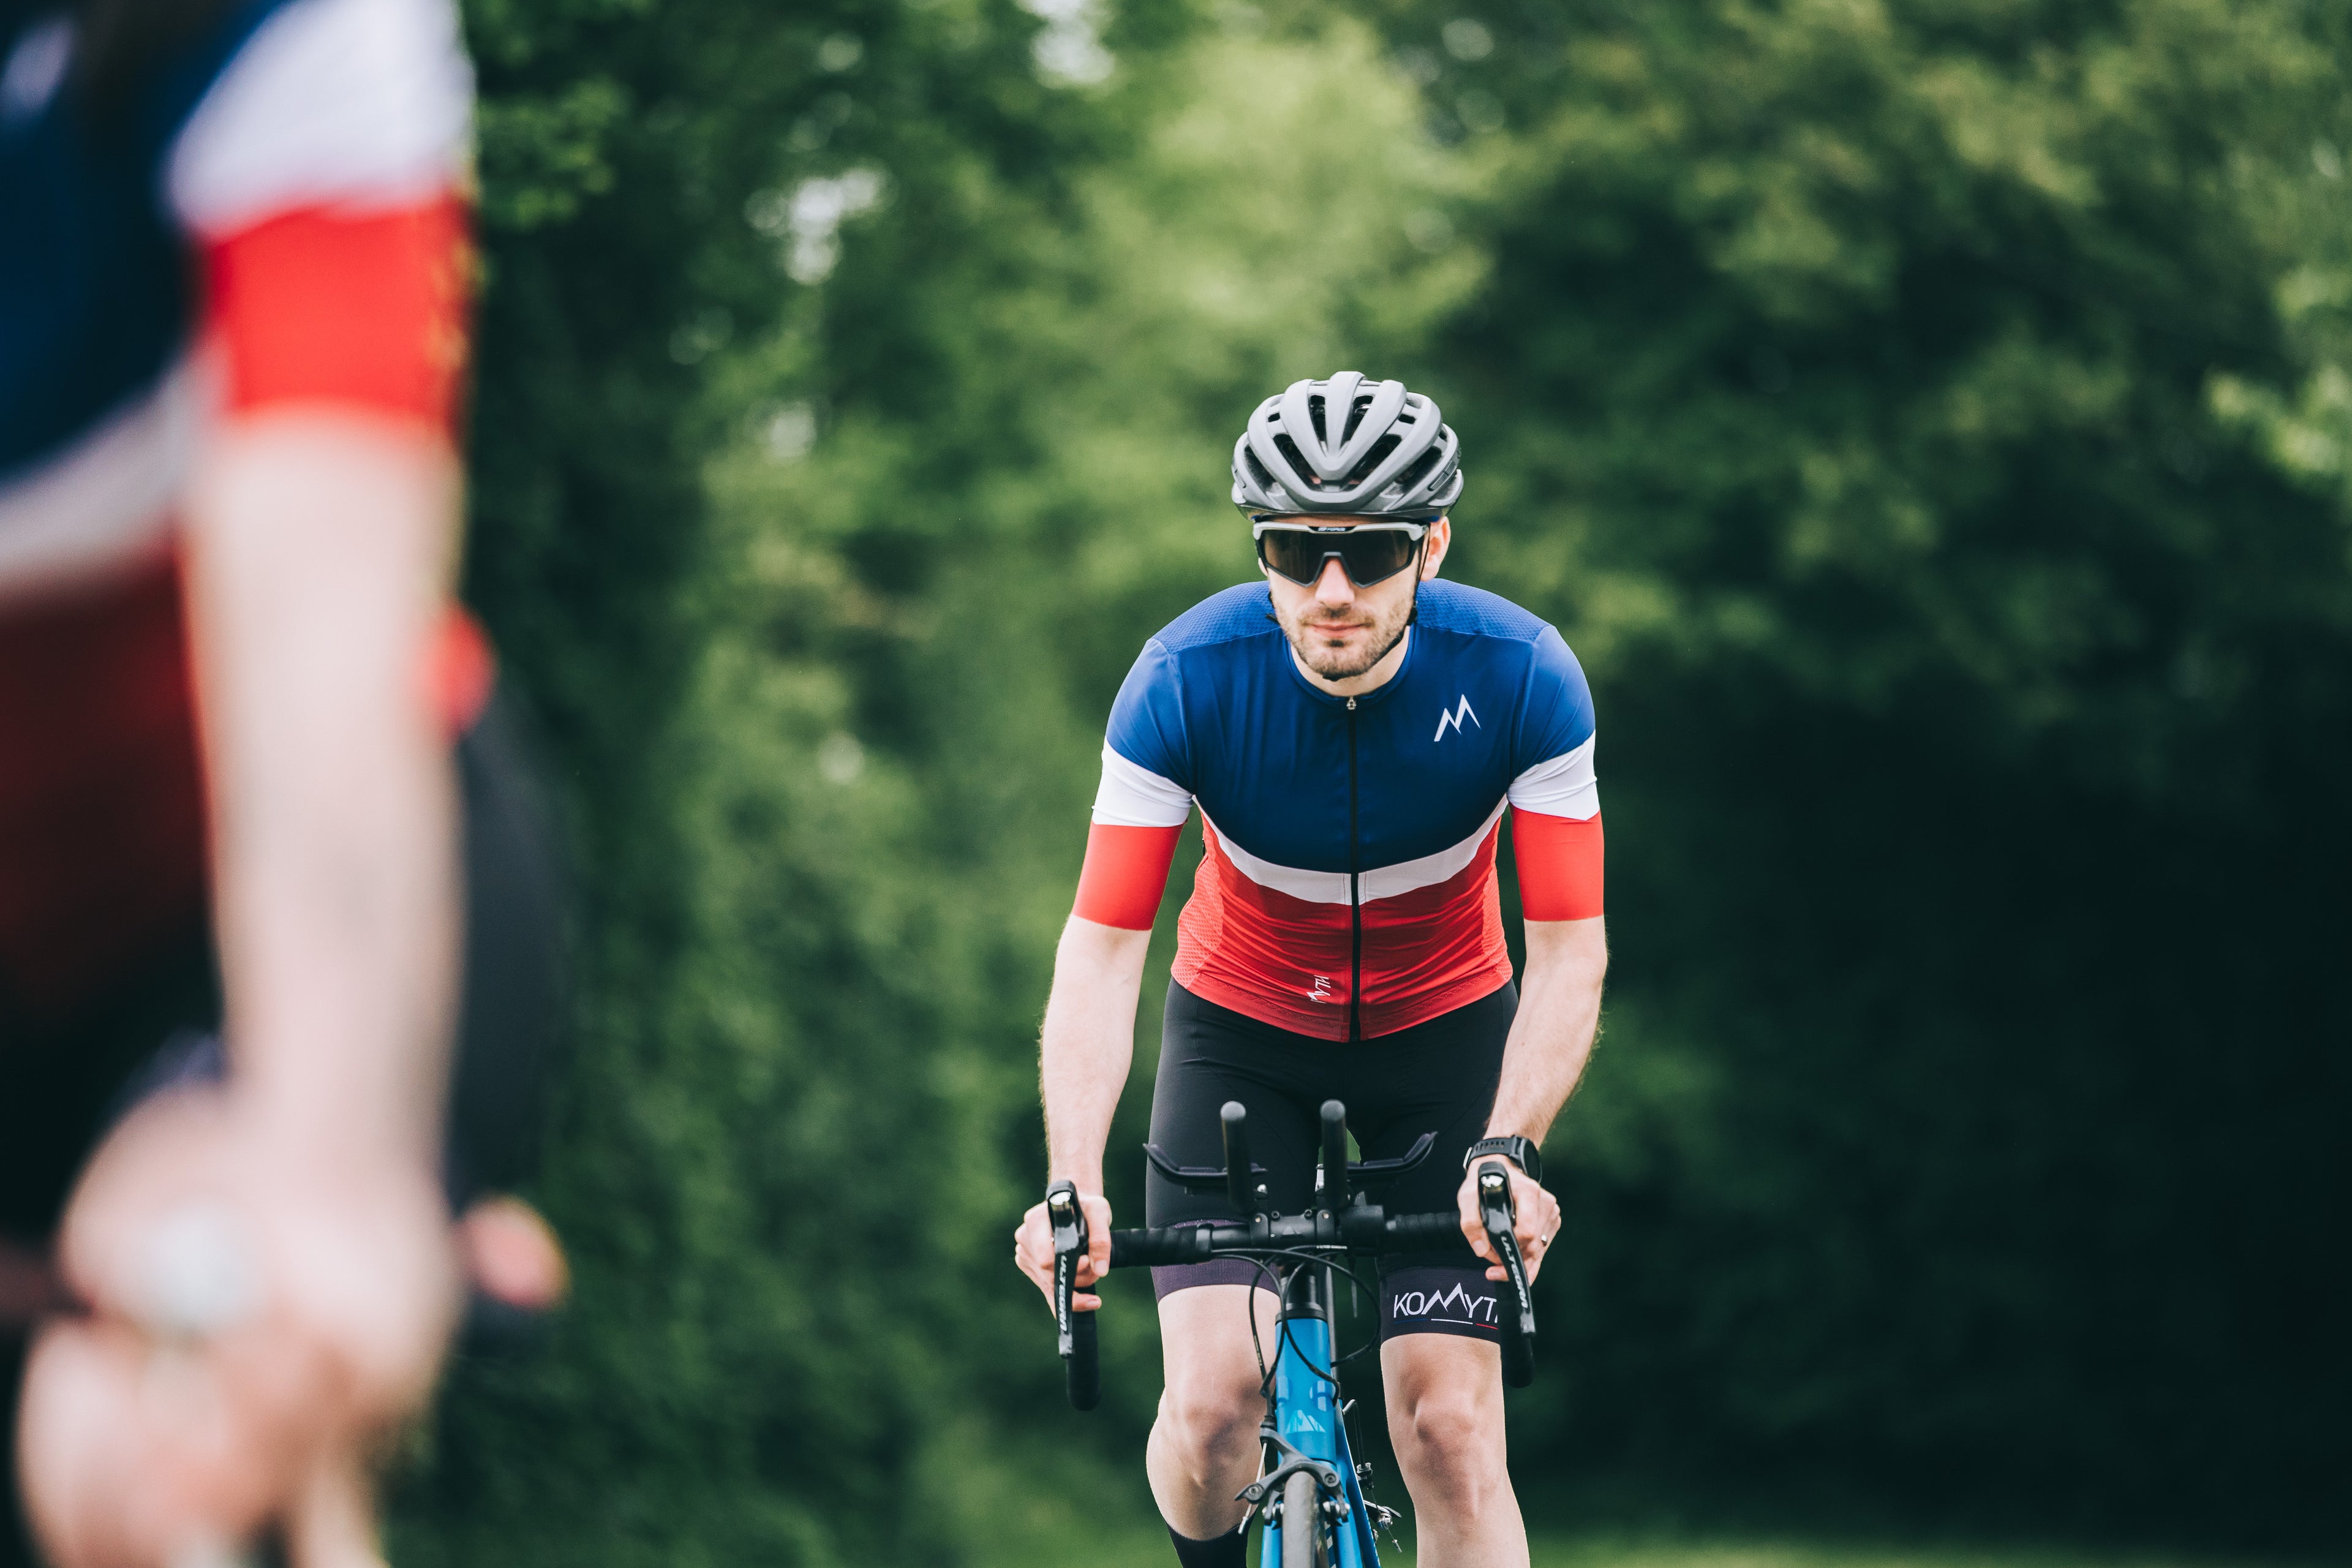 Cycliste avec maillot komyth de gamme allure team france (bleu blanc rouge)